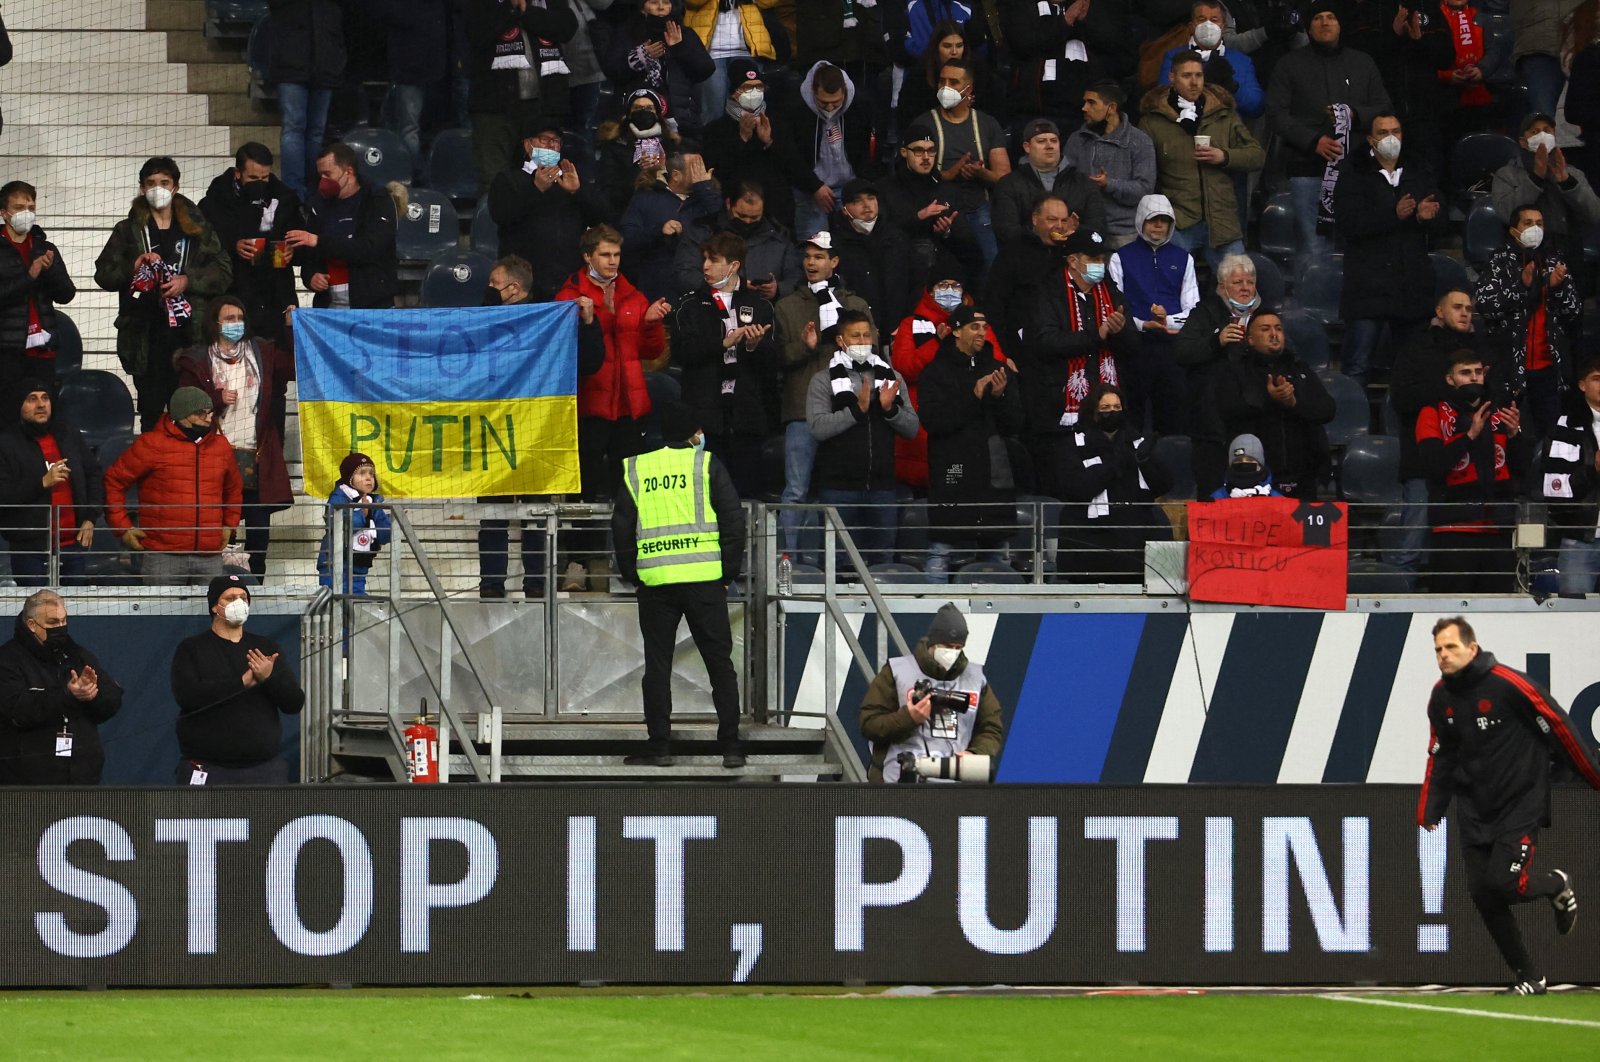 Football fans hold an anti-war banner in support of Ukraine during a Bundesliga match between Eintracht Frankfurt and Bayern Munich, Frankfurt, Germany, Feb. 26, 2022. (Reuters Photo)